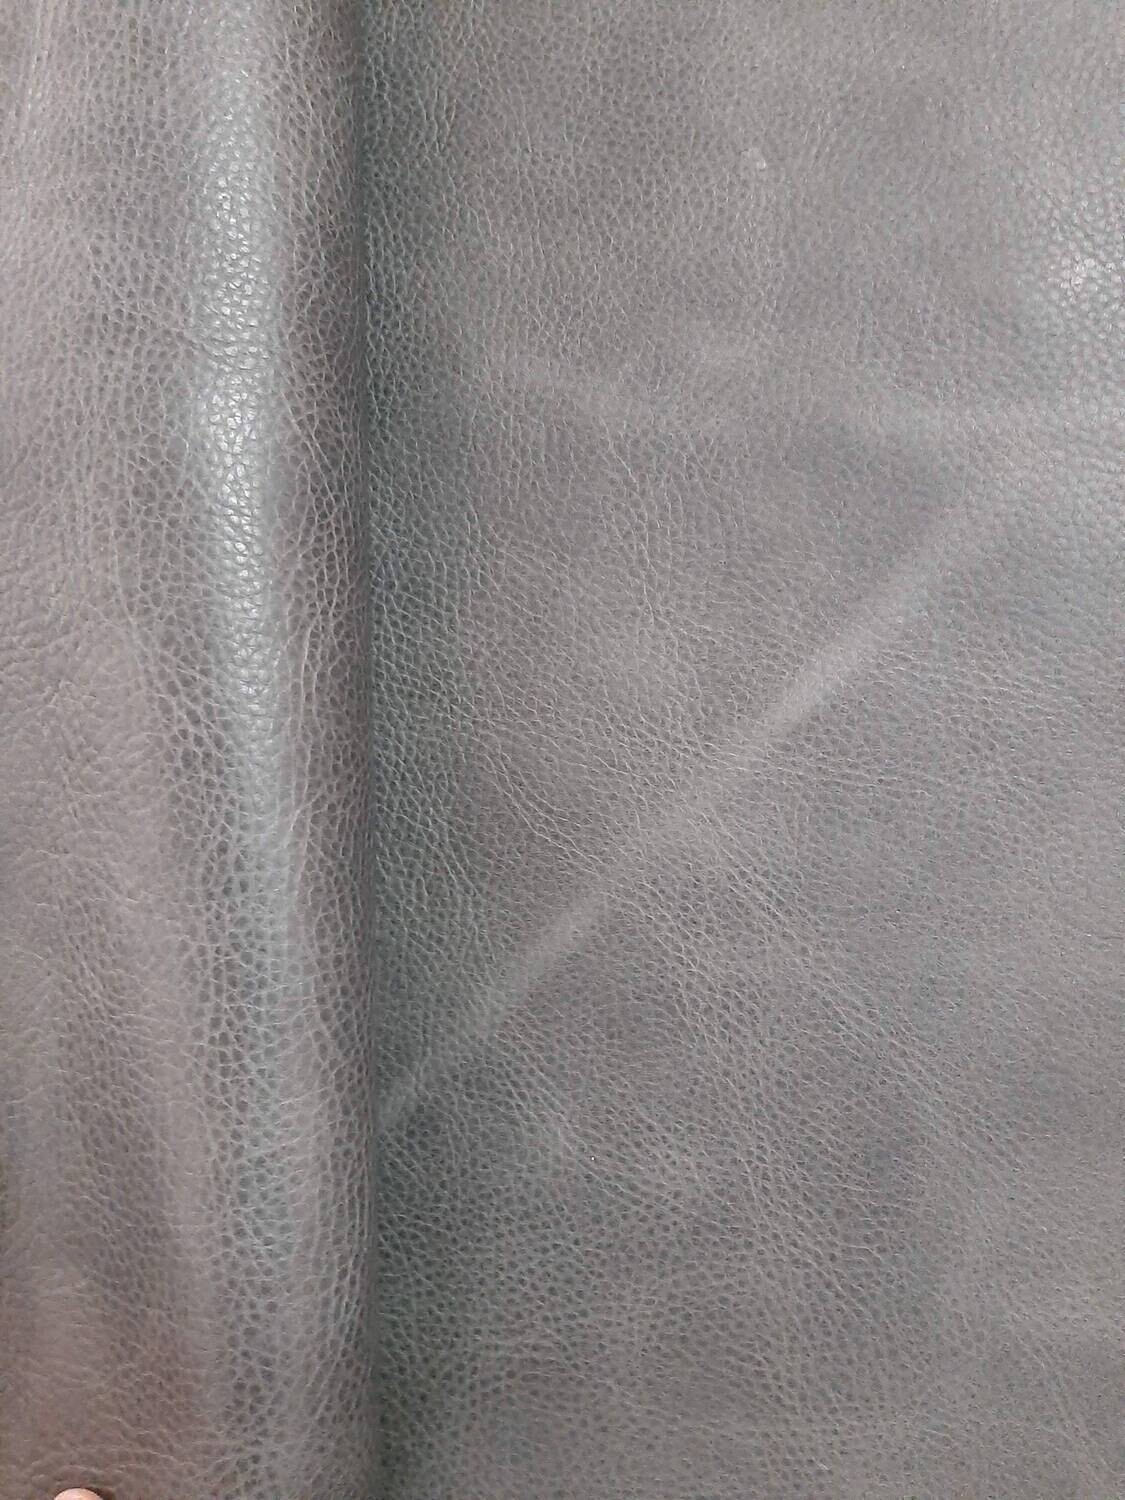 Large off cut - Leather bovine texas grey